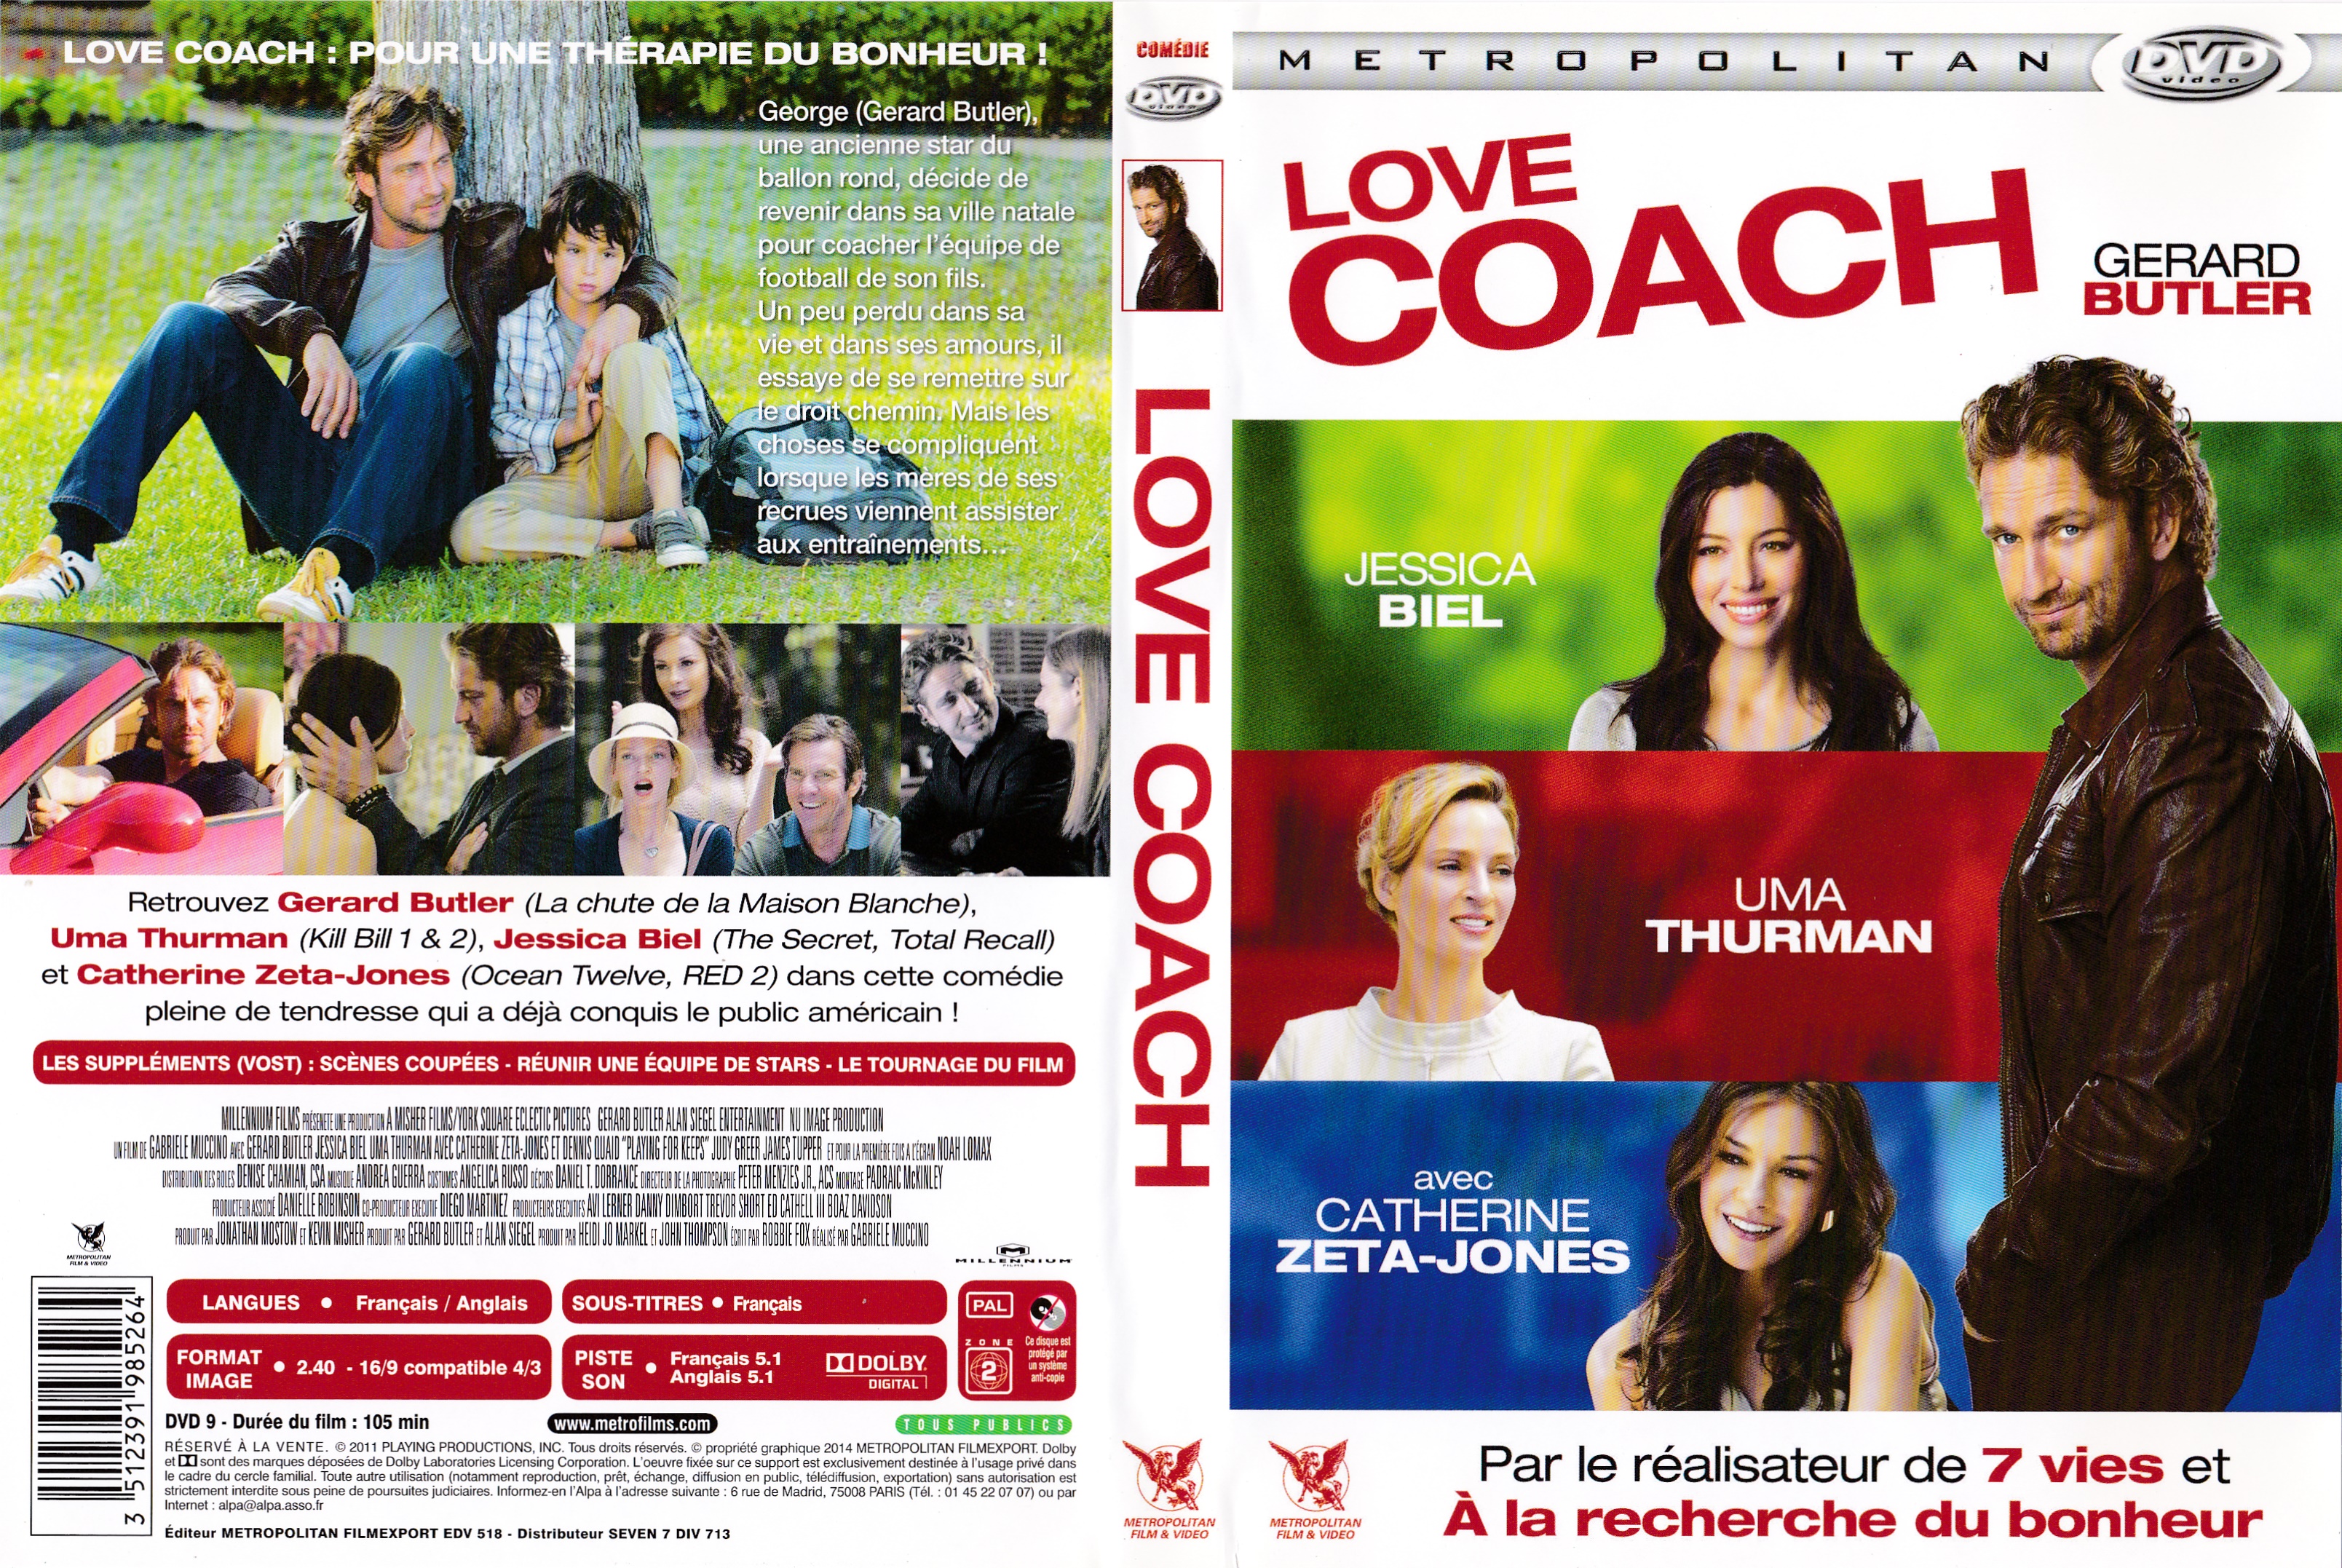 Jaquette DVD Love coach